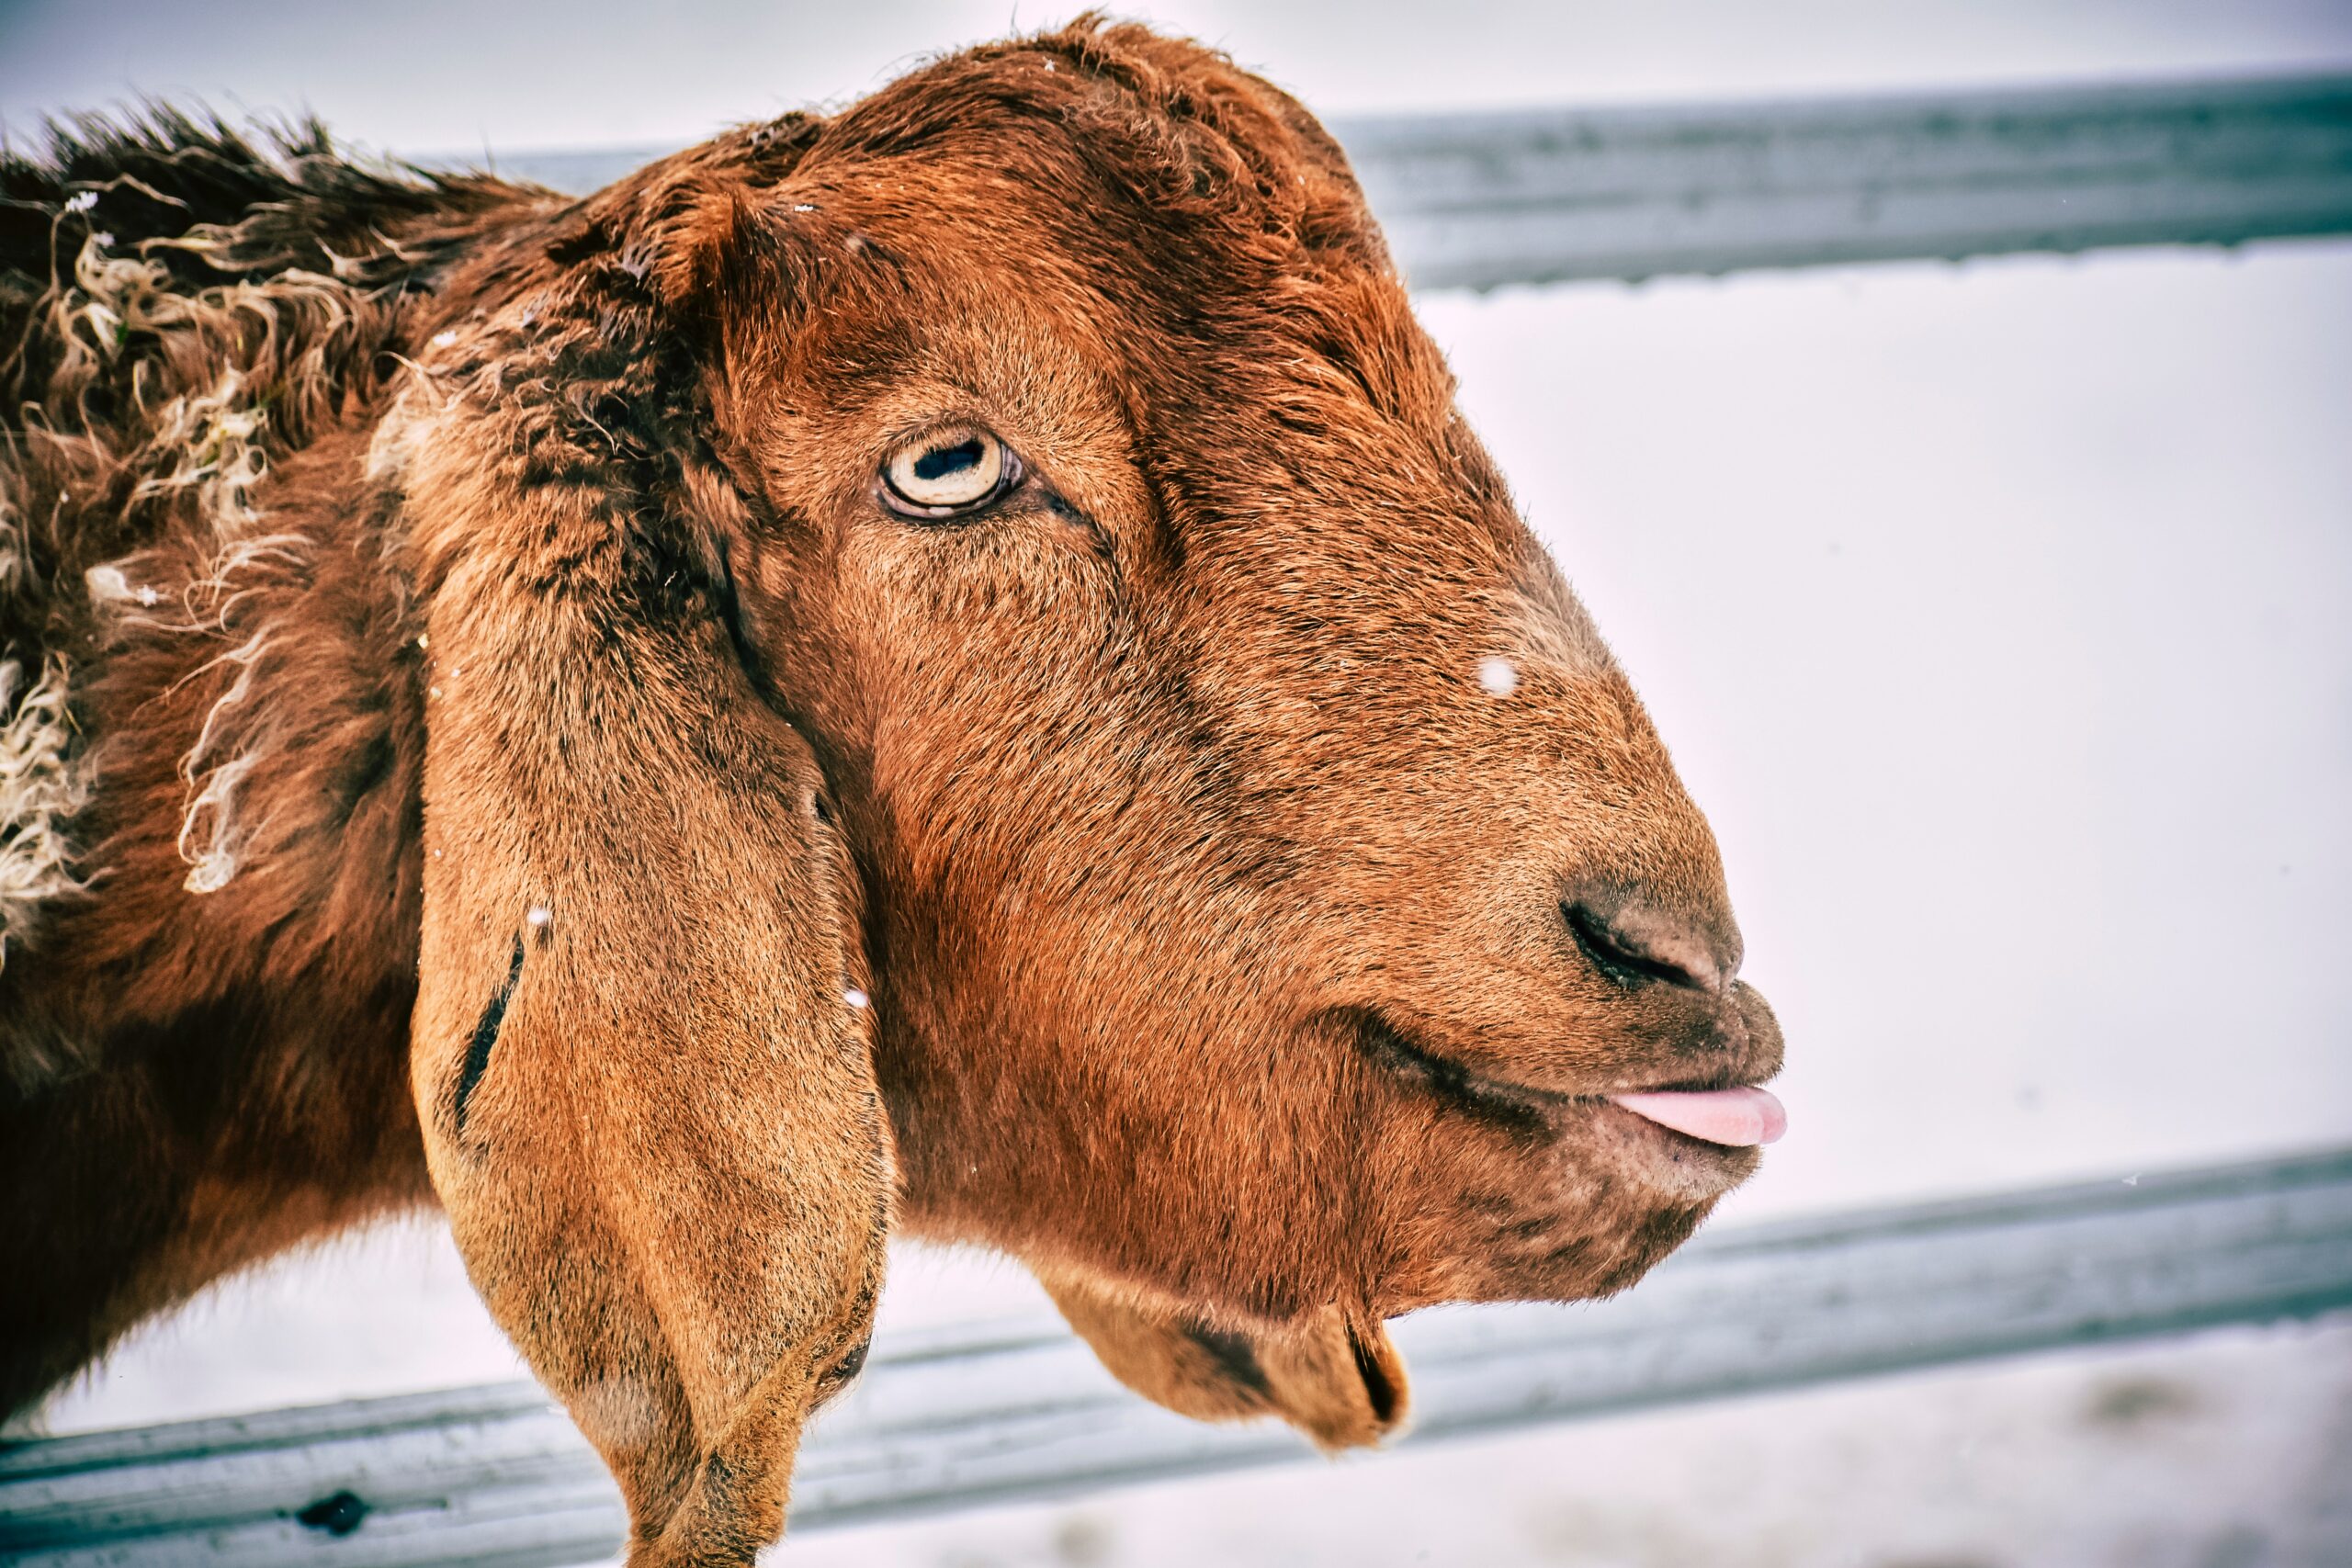 Parasite Control in Goats by Mario Villarino